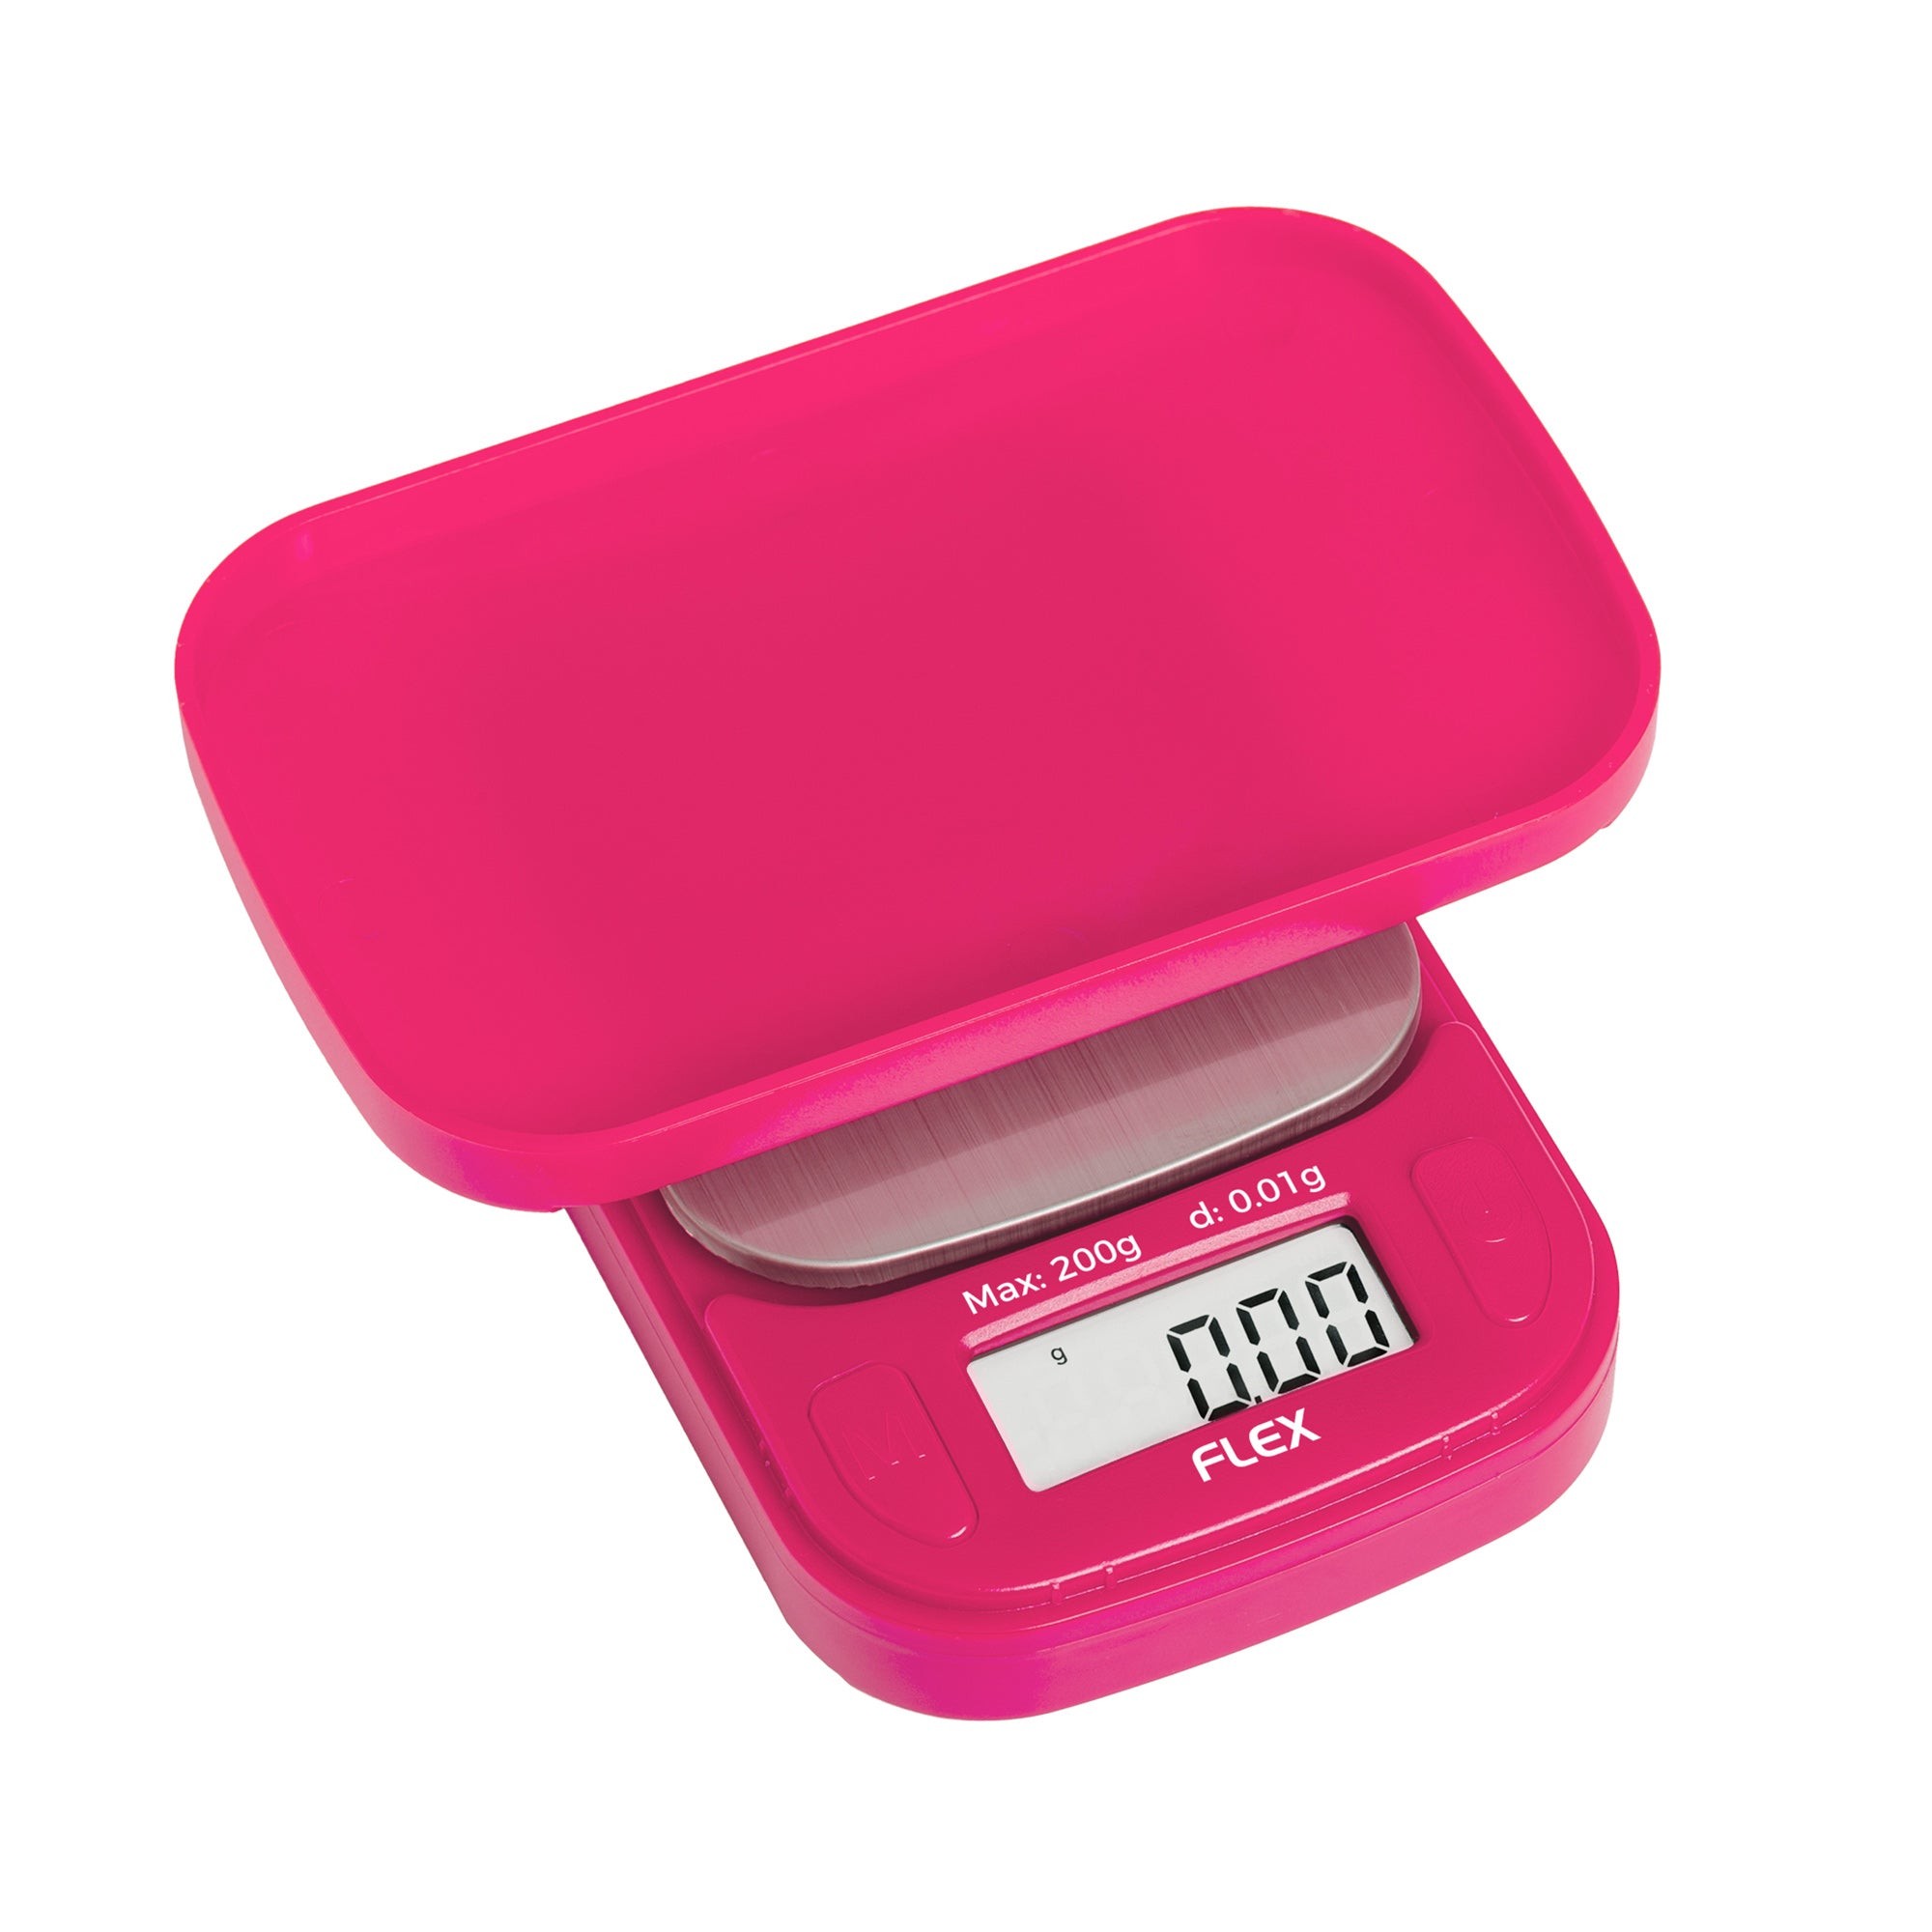 Truweigh Flex Mini Scale – 200g x 0.01g - Pink